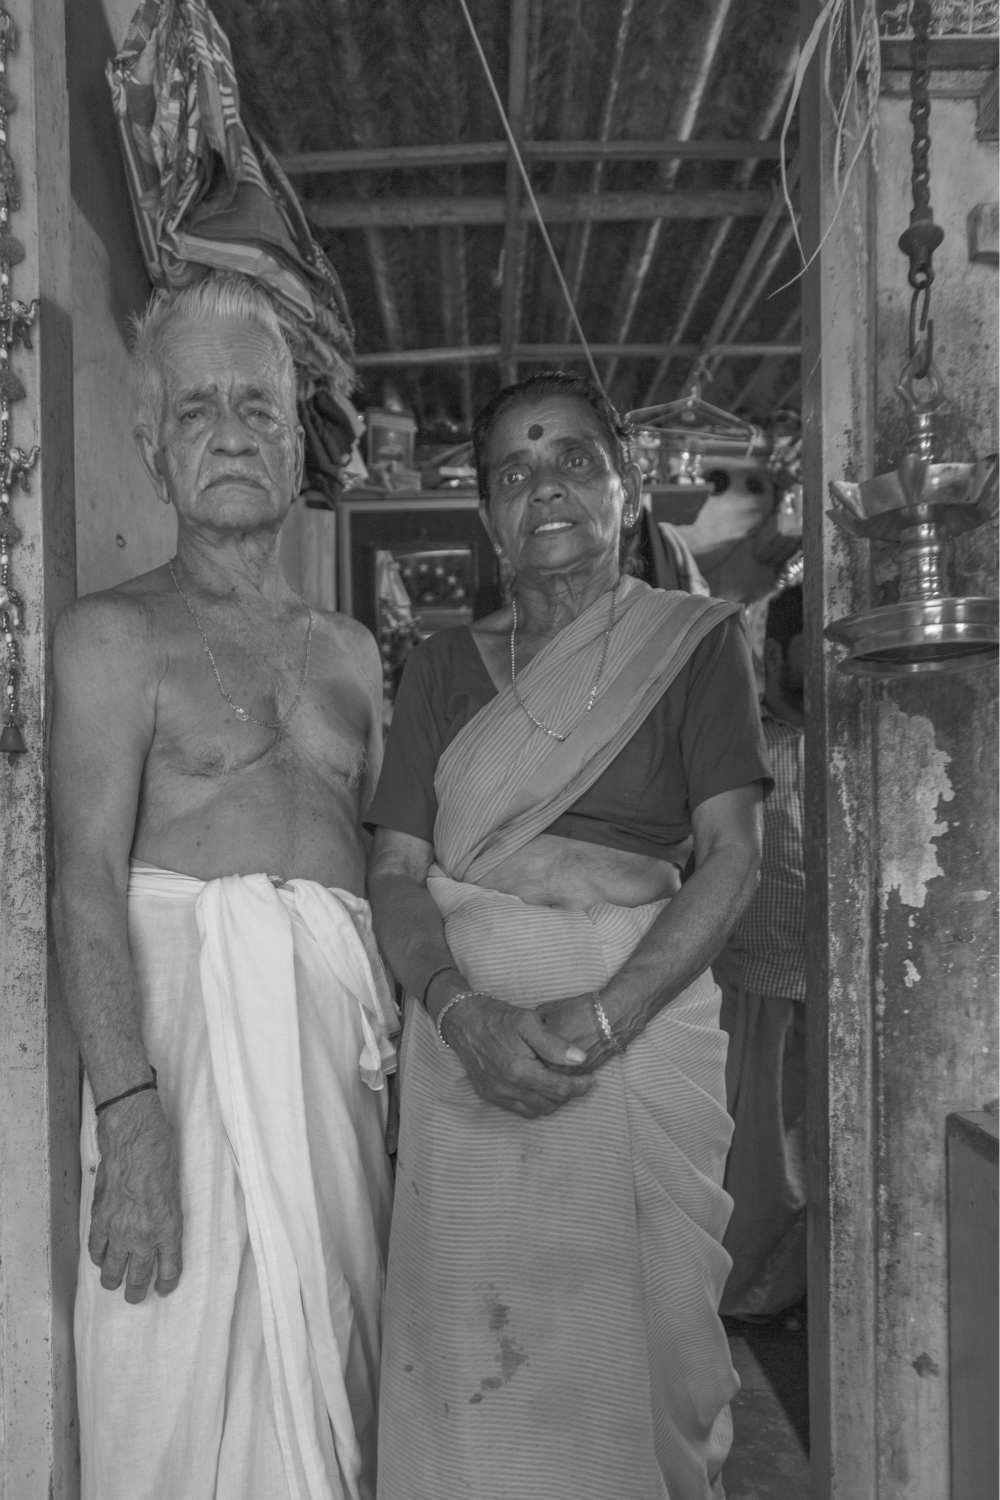 COMMUNITIES OF KOCHI
21: Tamil Vaniyar